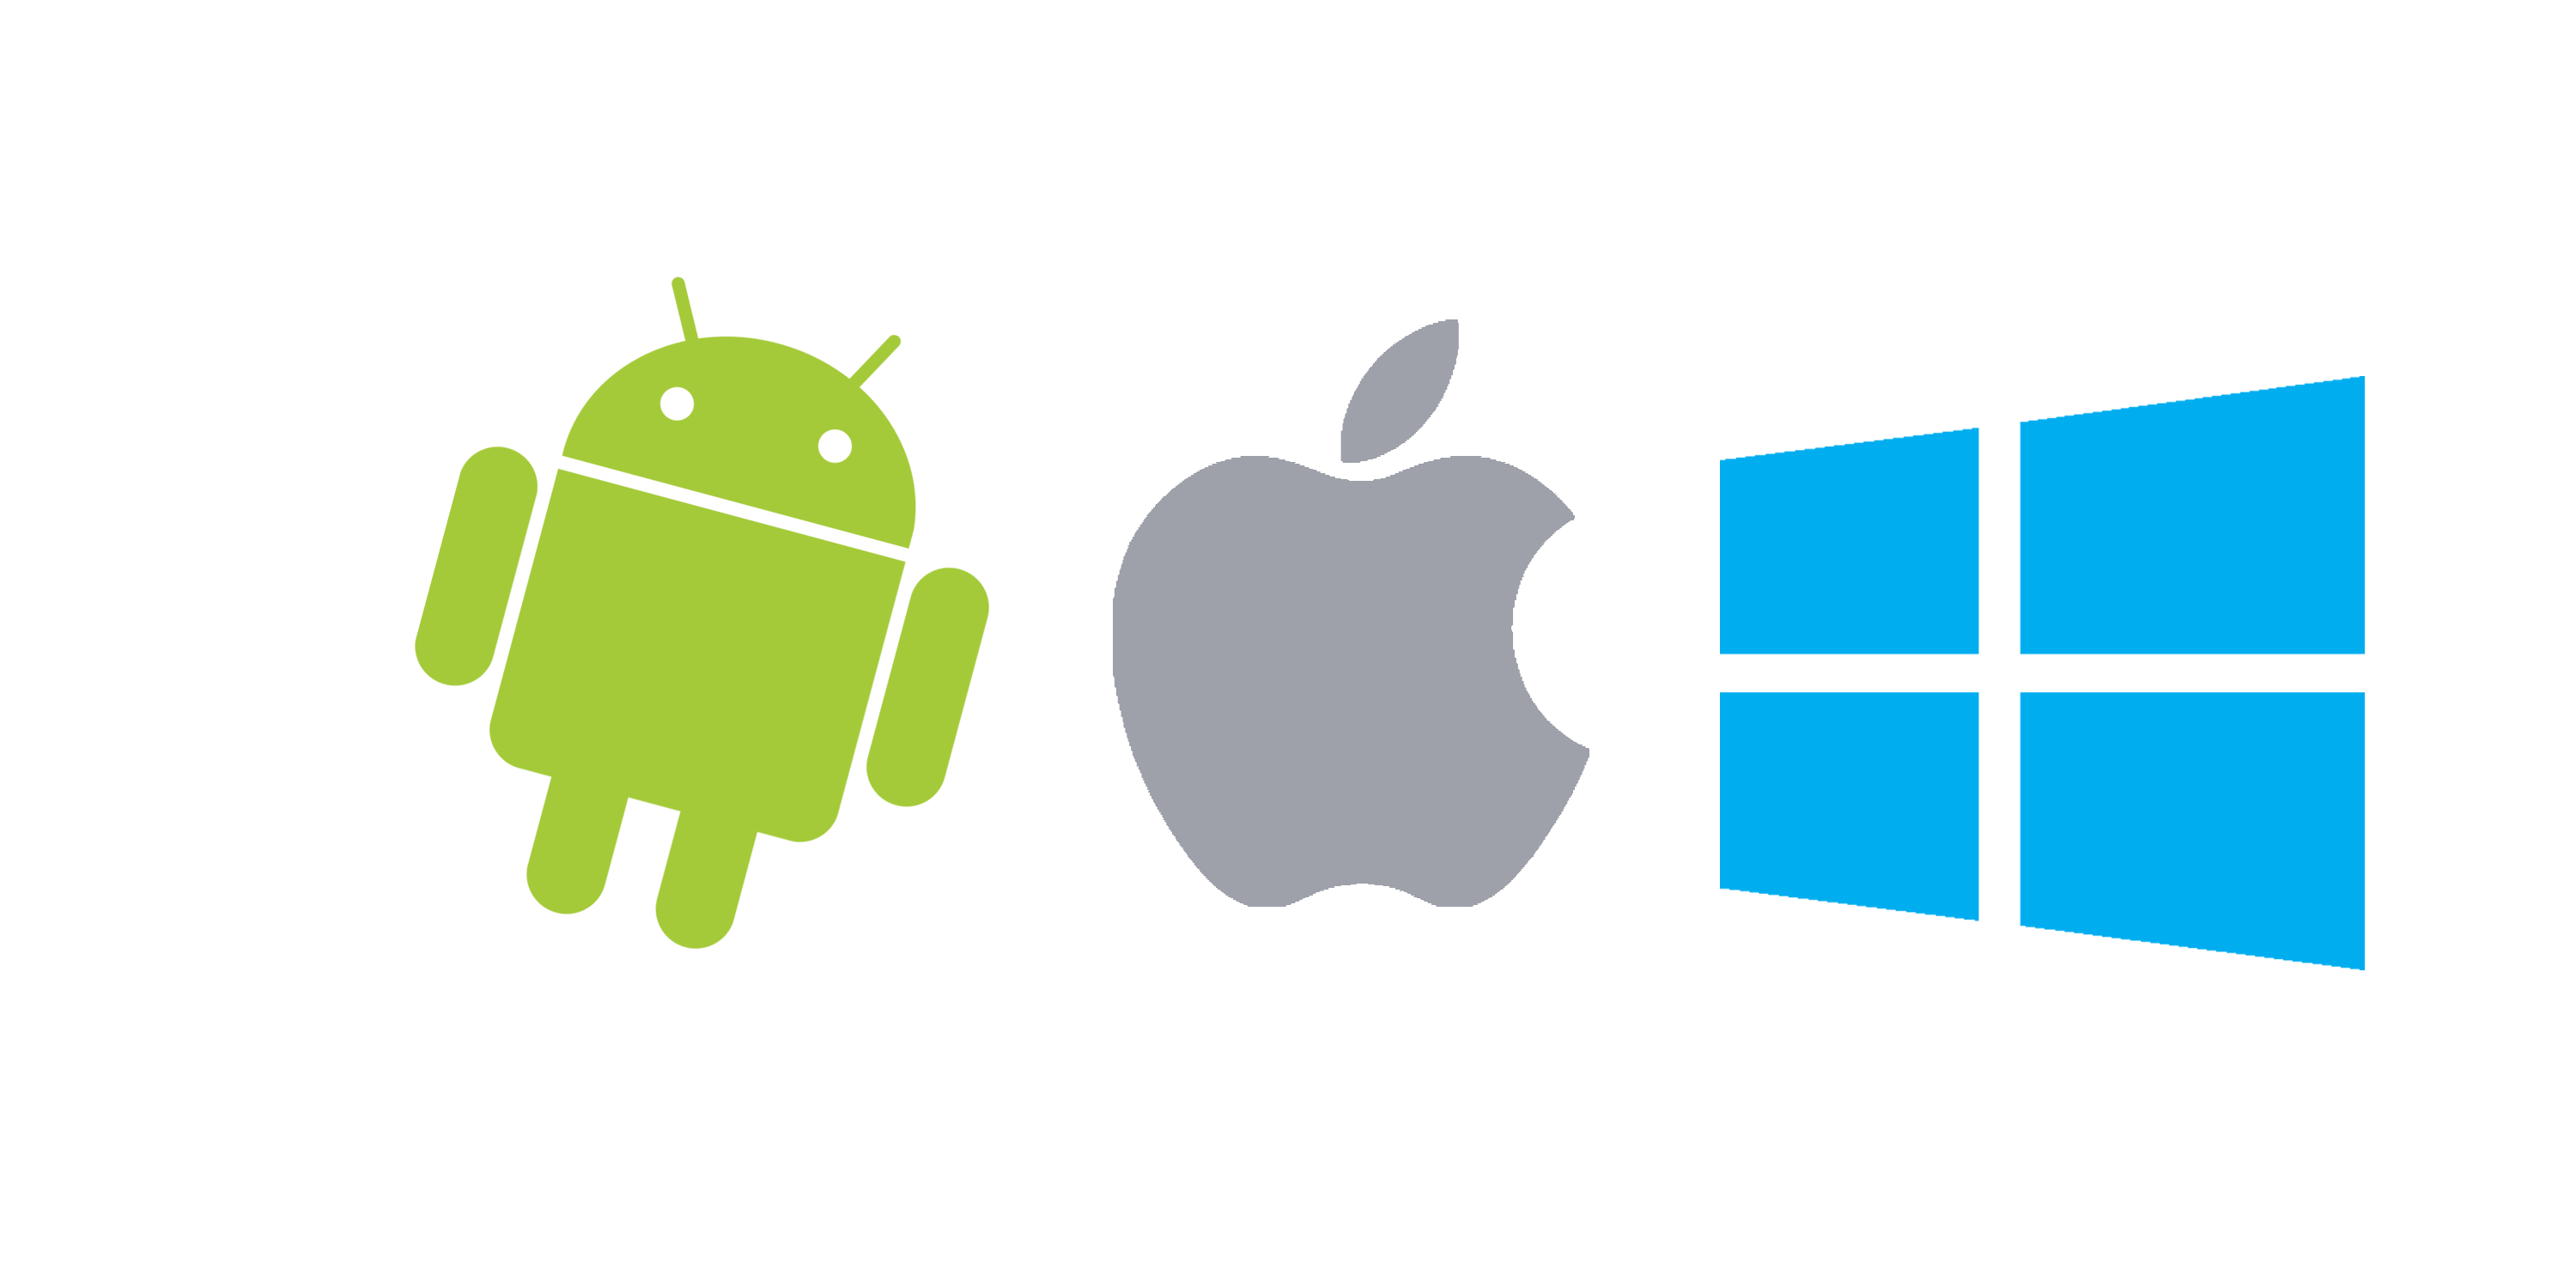 Logotipo de Windows Imagen Transparente